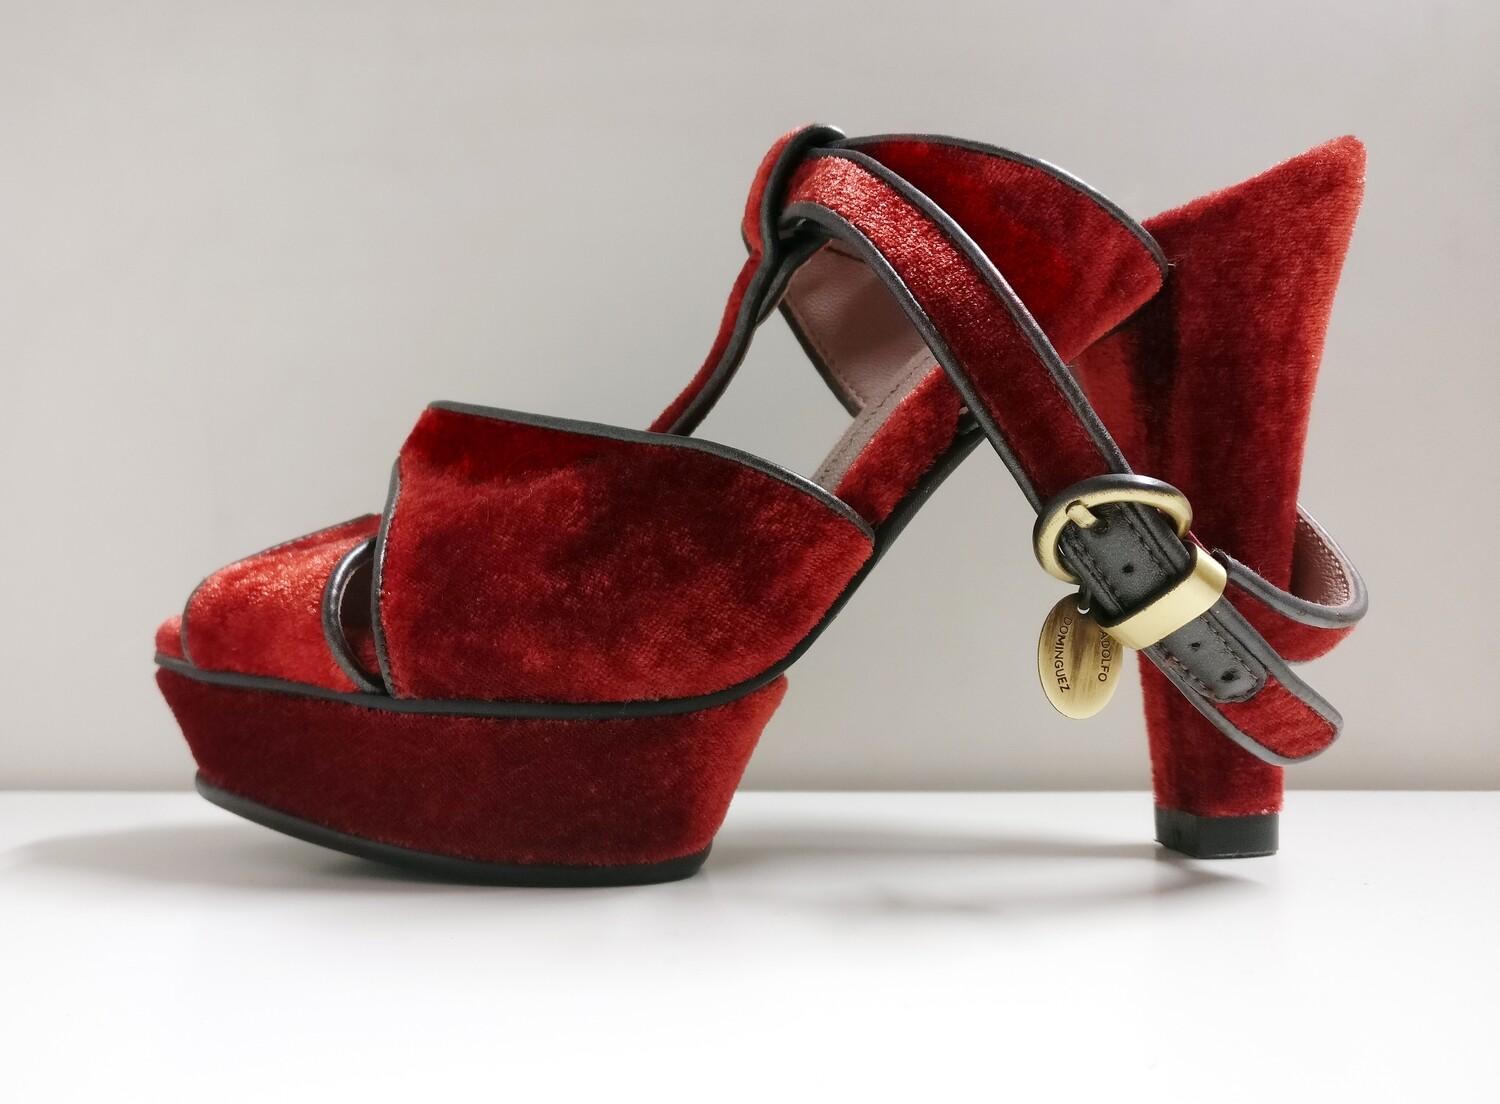 Beautiful Velvet shoes by Adolfo Dominguez